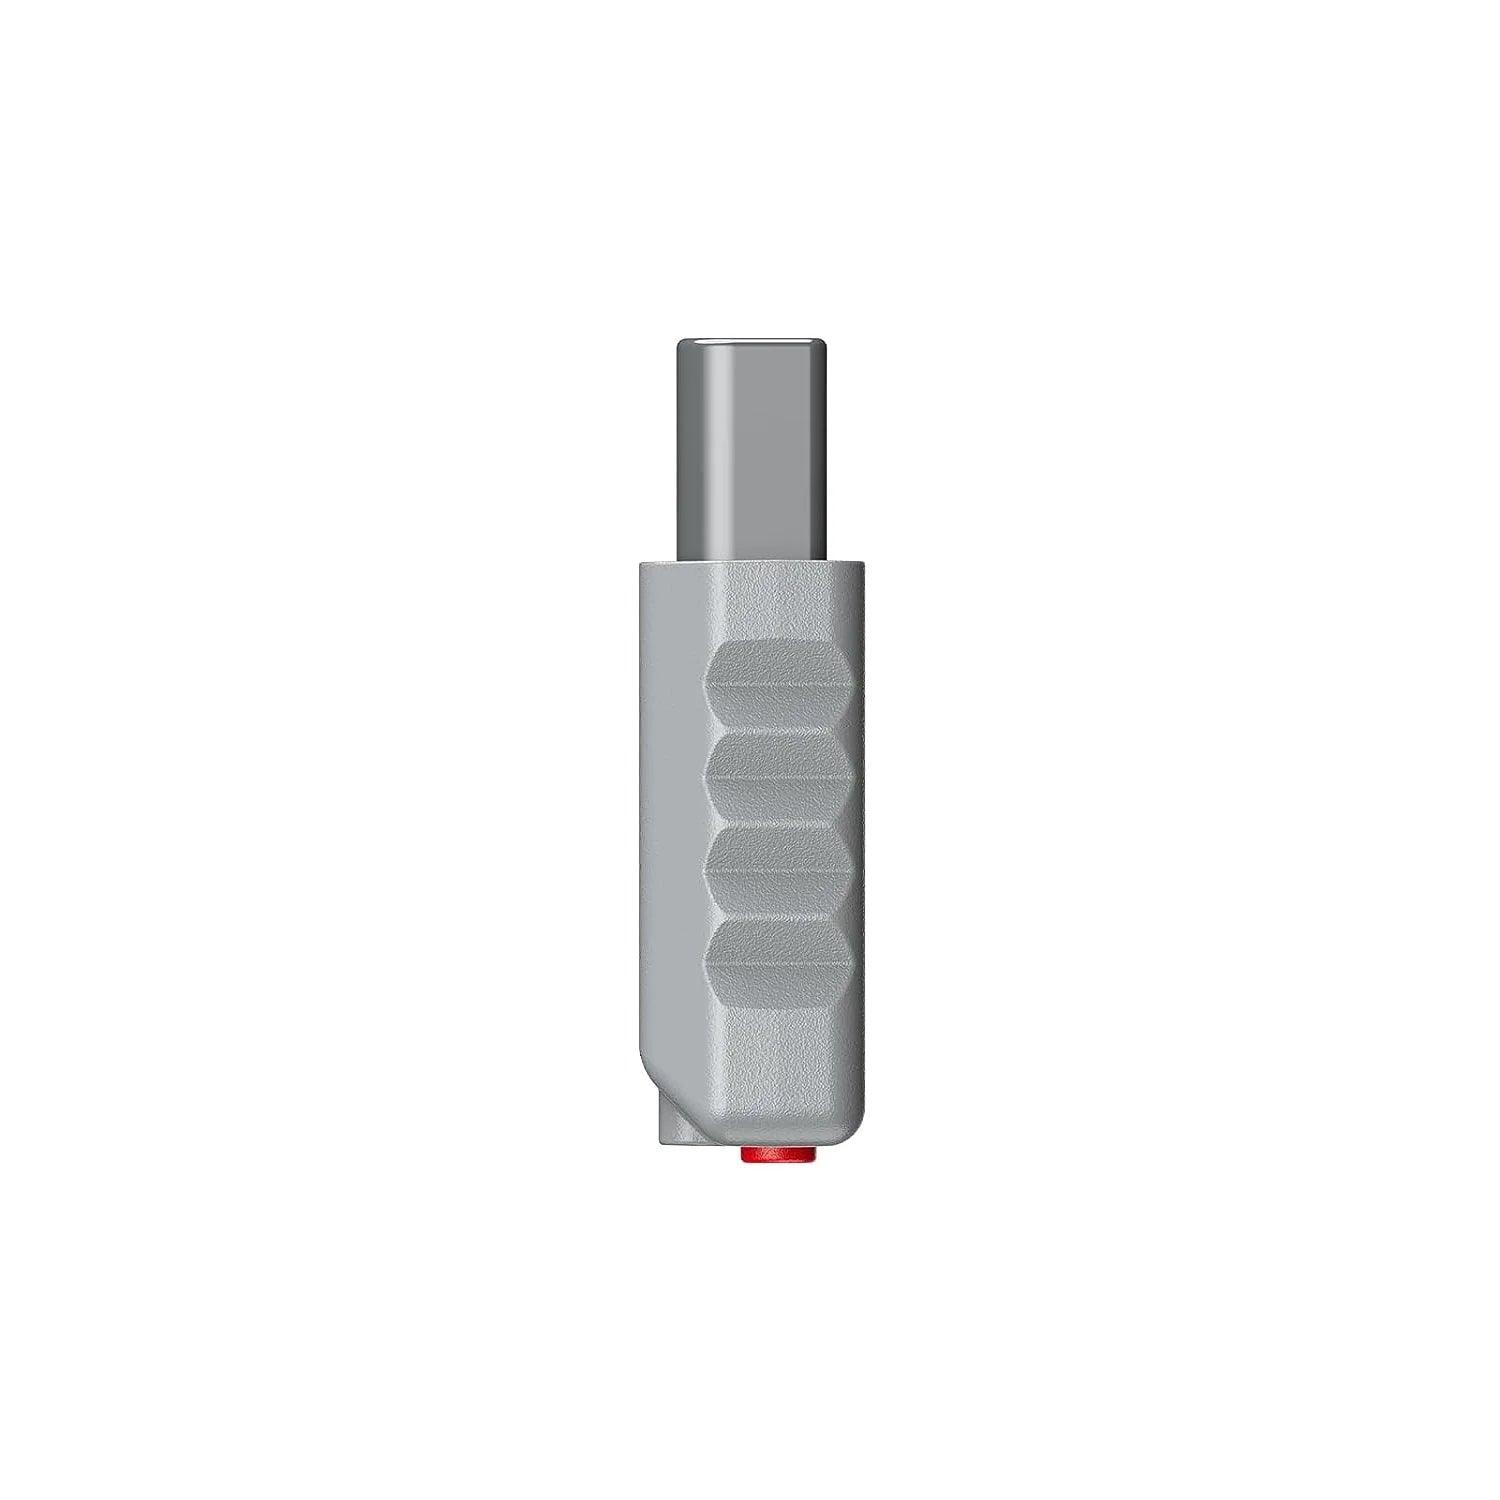 8BitDo Trådløs Adapter for PlayStation 1 & 2 (PS1 / PS2) - RetroGaming.no